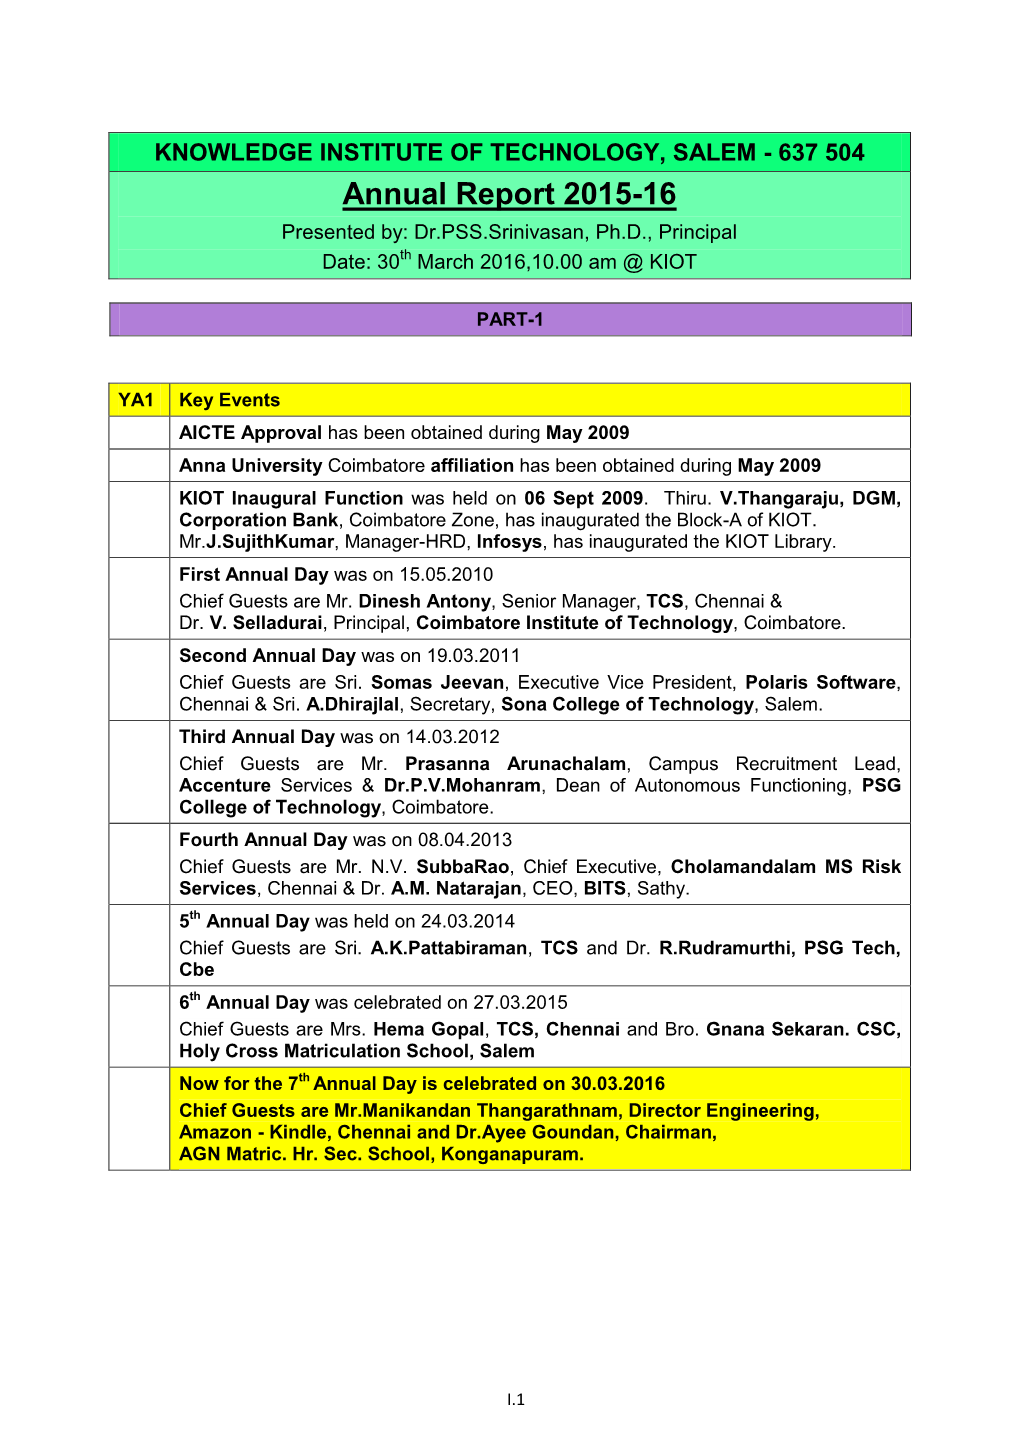 Annual Report 2015-16 Presented By: Dr.PSS.Srinivasan, Ph.D., Principal Date: 30Th March 2016,10.00 Am @ KIOT